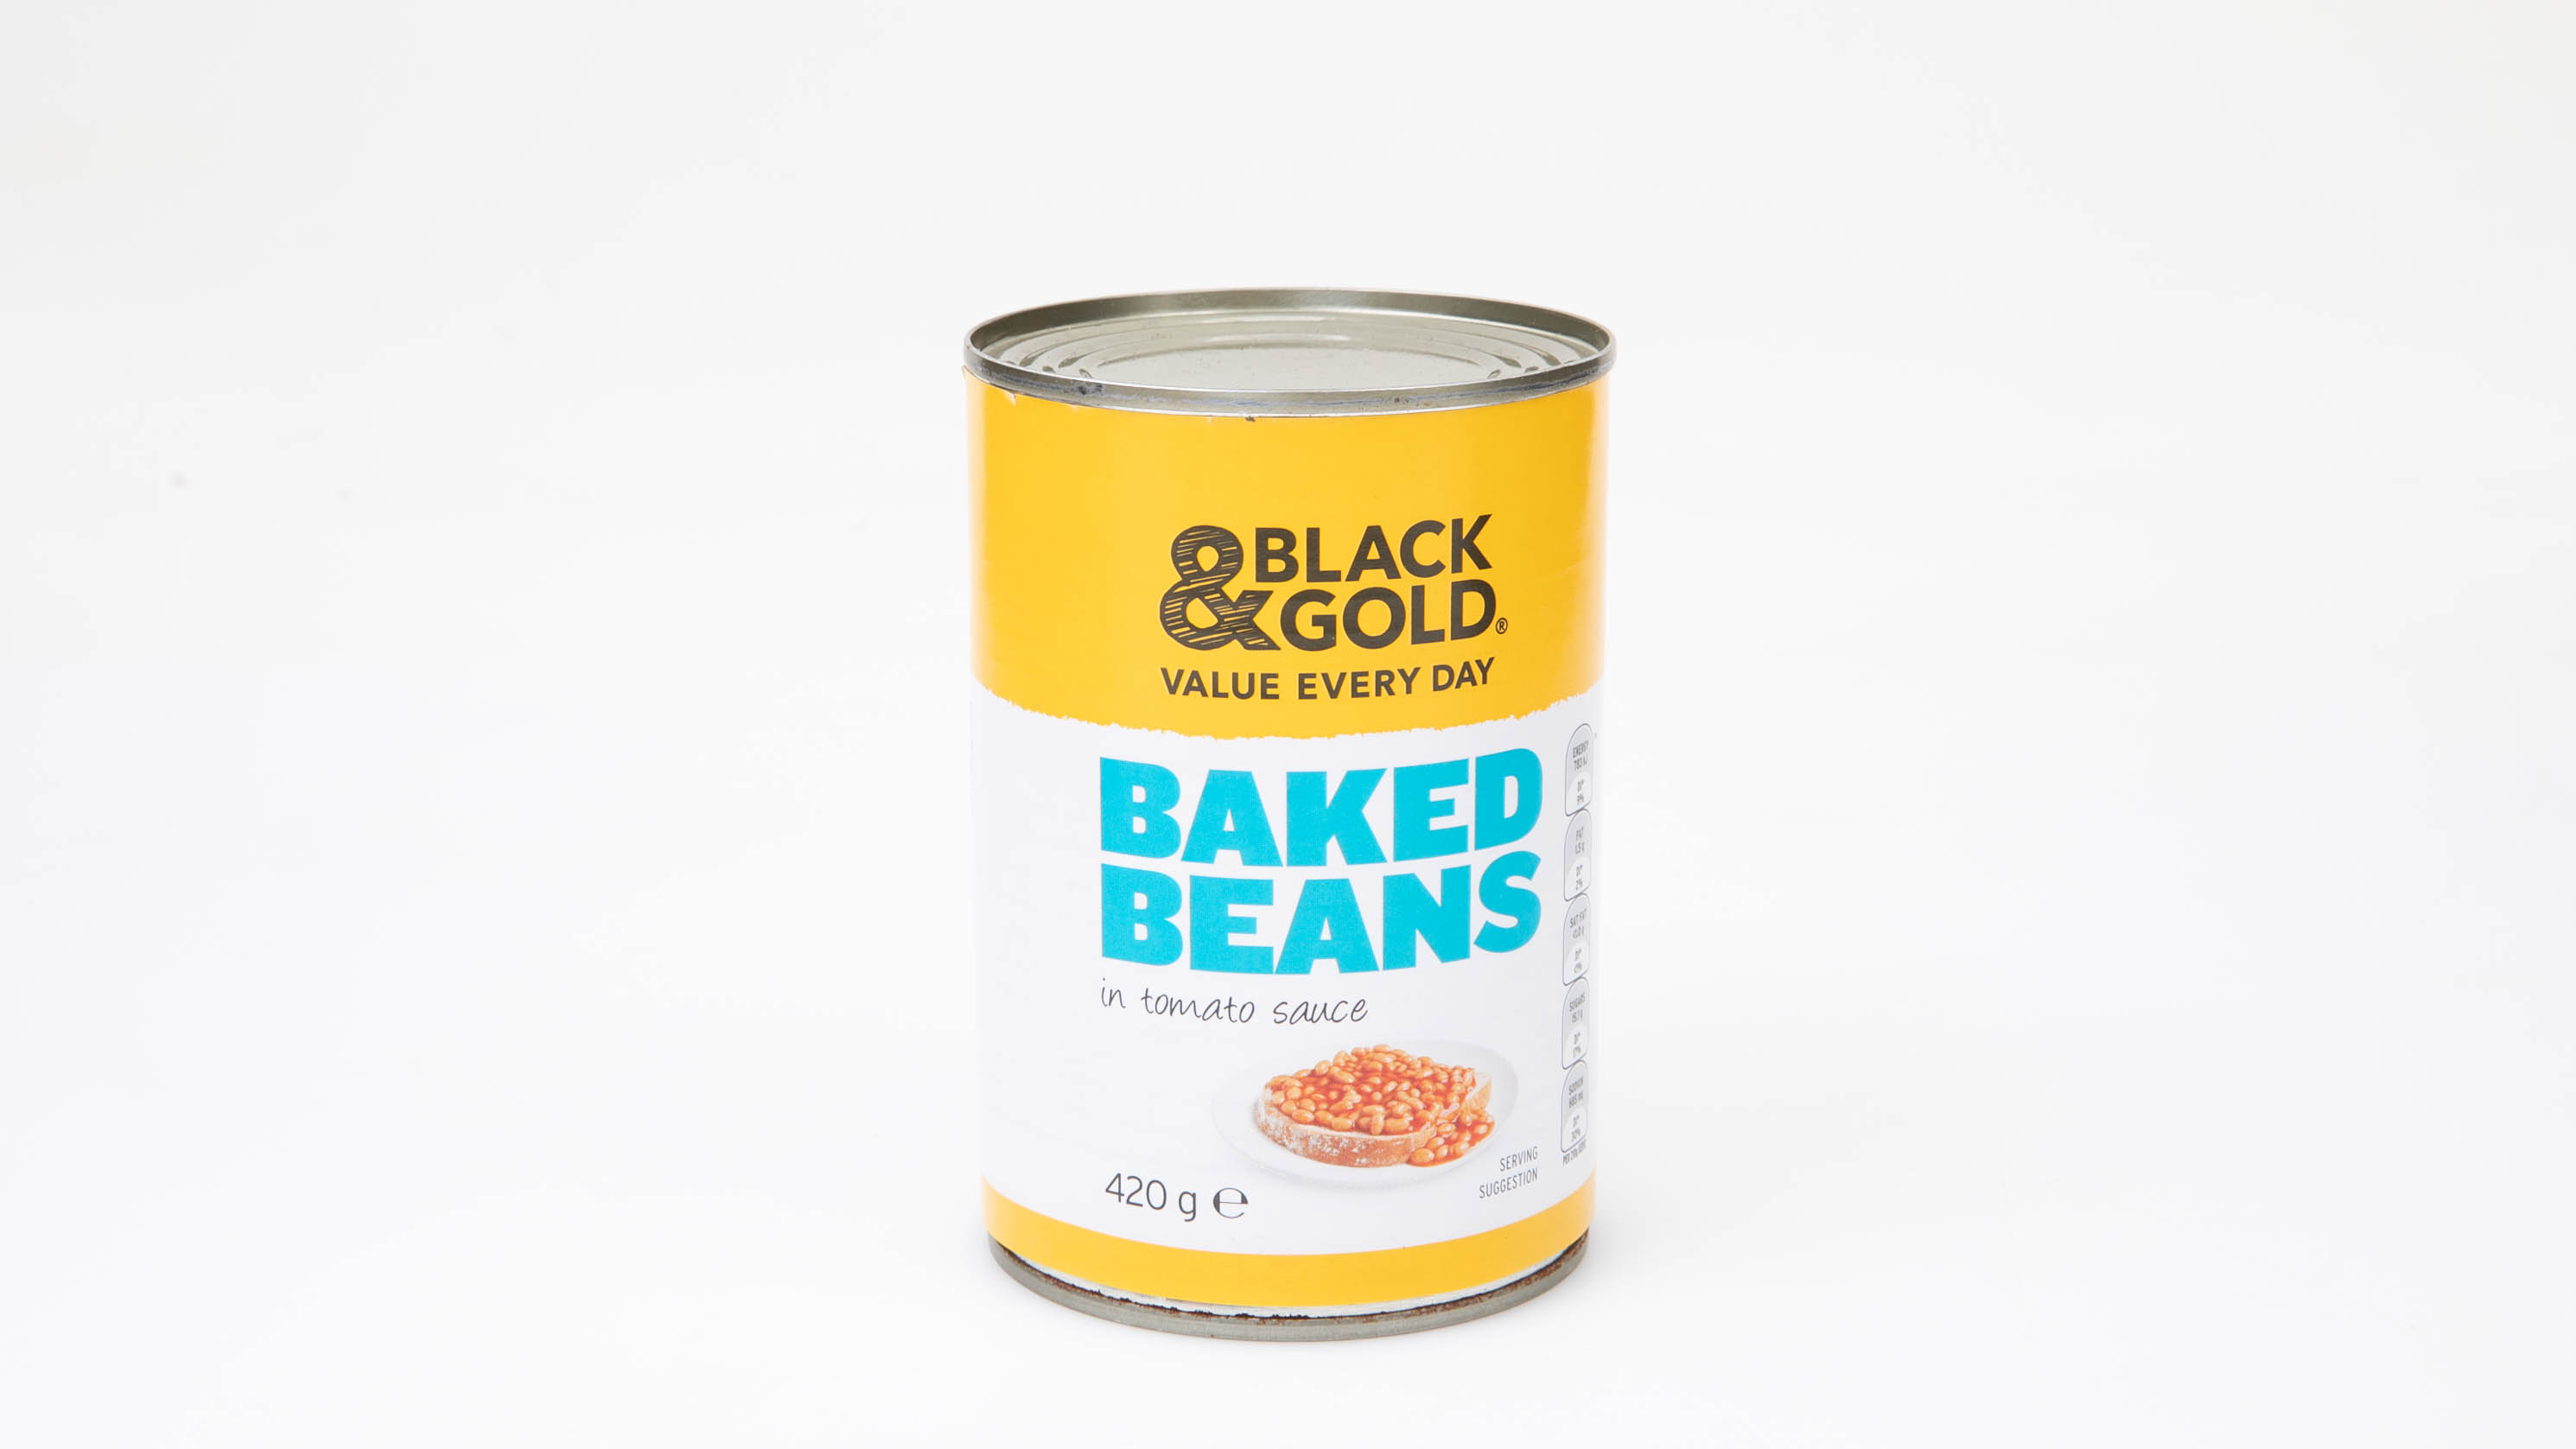 Black & Gold Baked Beans in Tomato Sauce carousel image